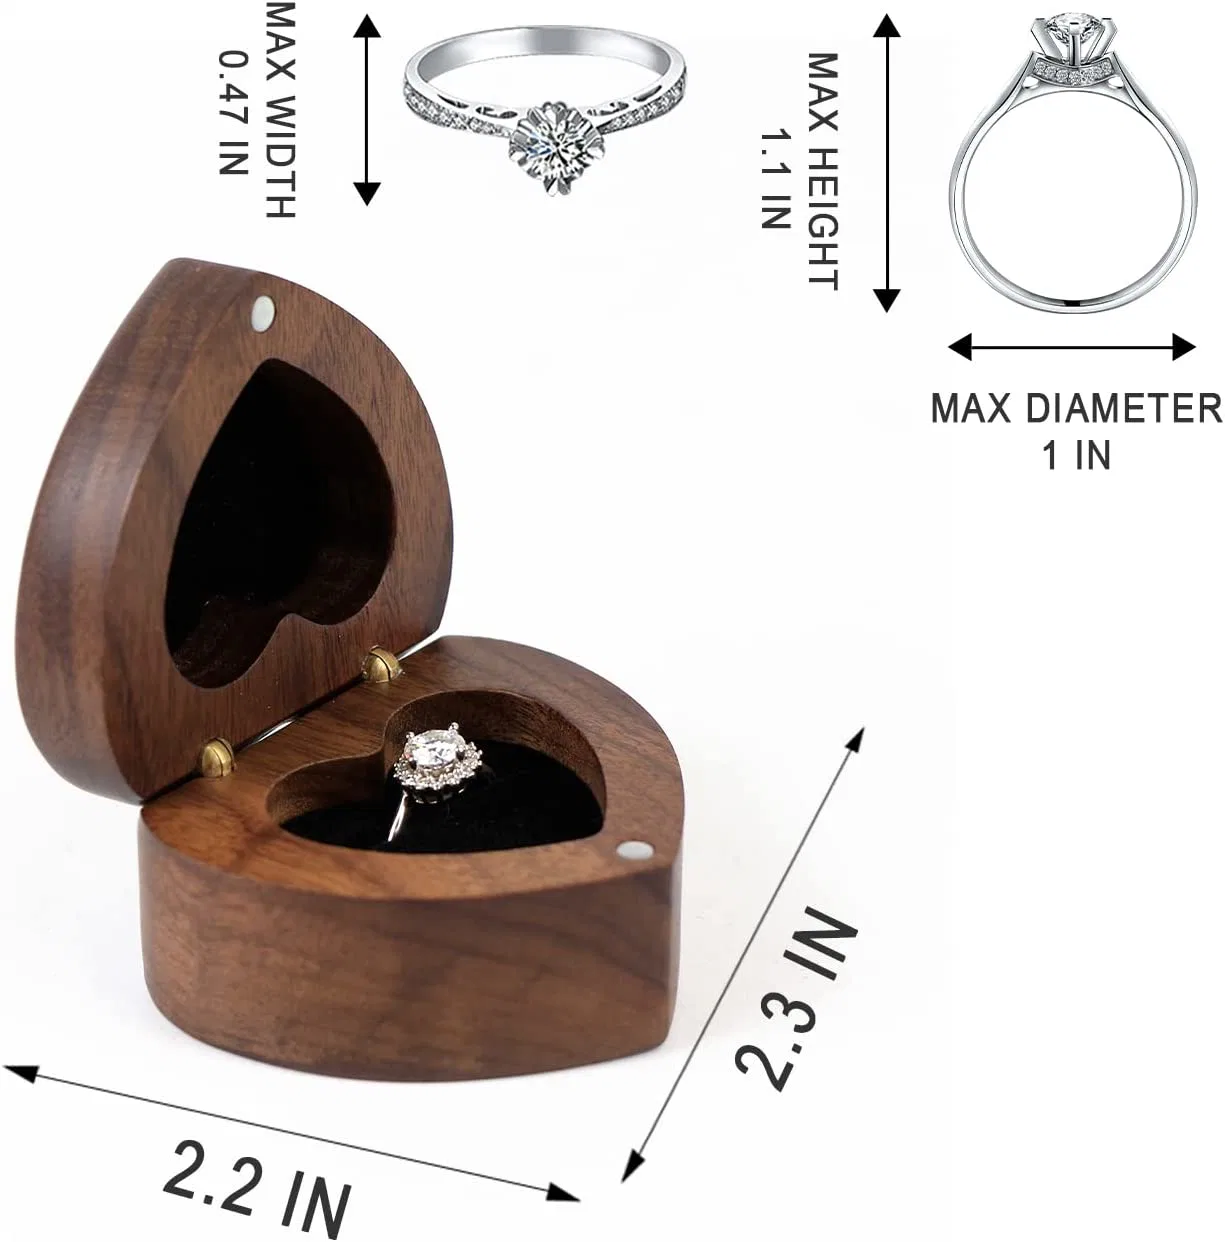 Caixa circular de engate em madeira pequena caixa circular plana fina para proposta, casamento